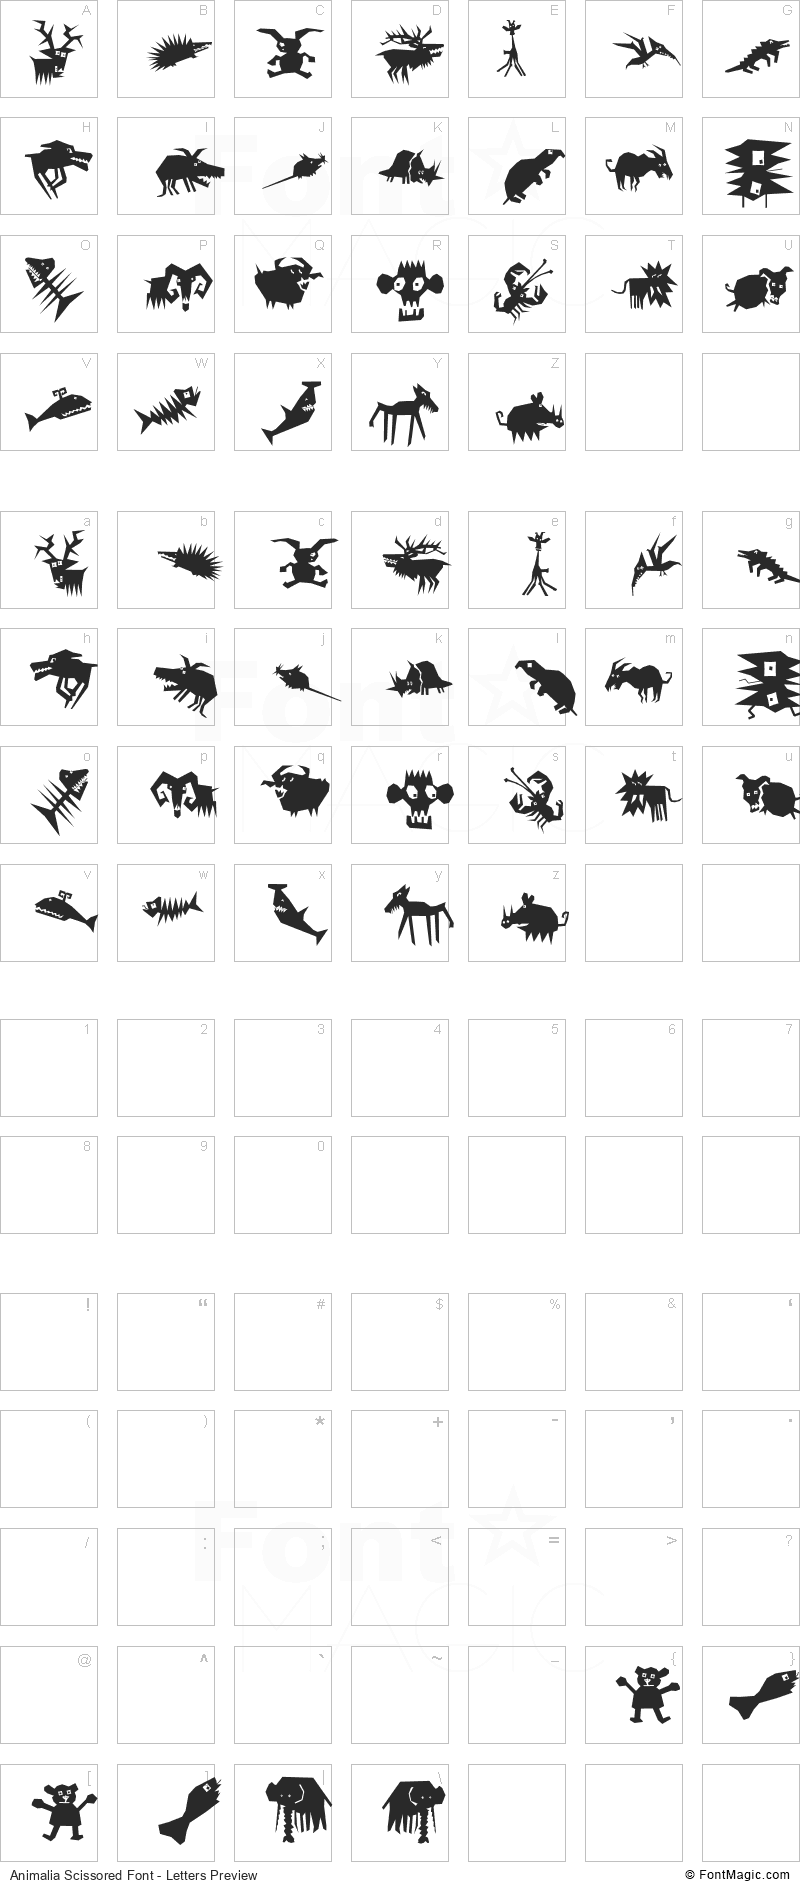 Animalia Scissored Font - All Latters Preview Chart